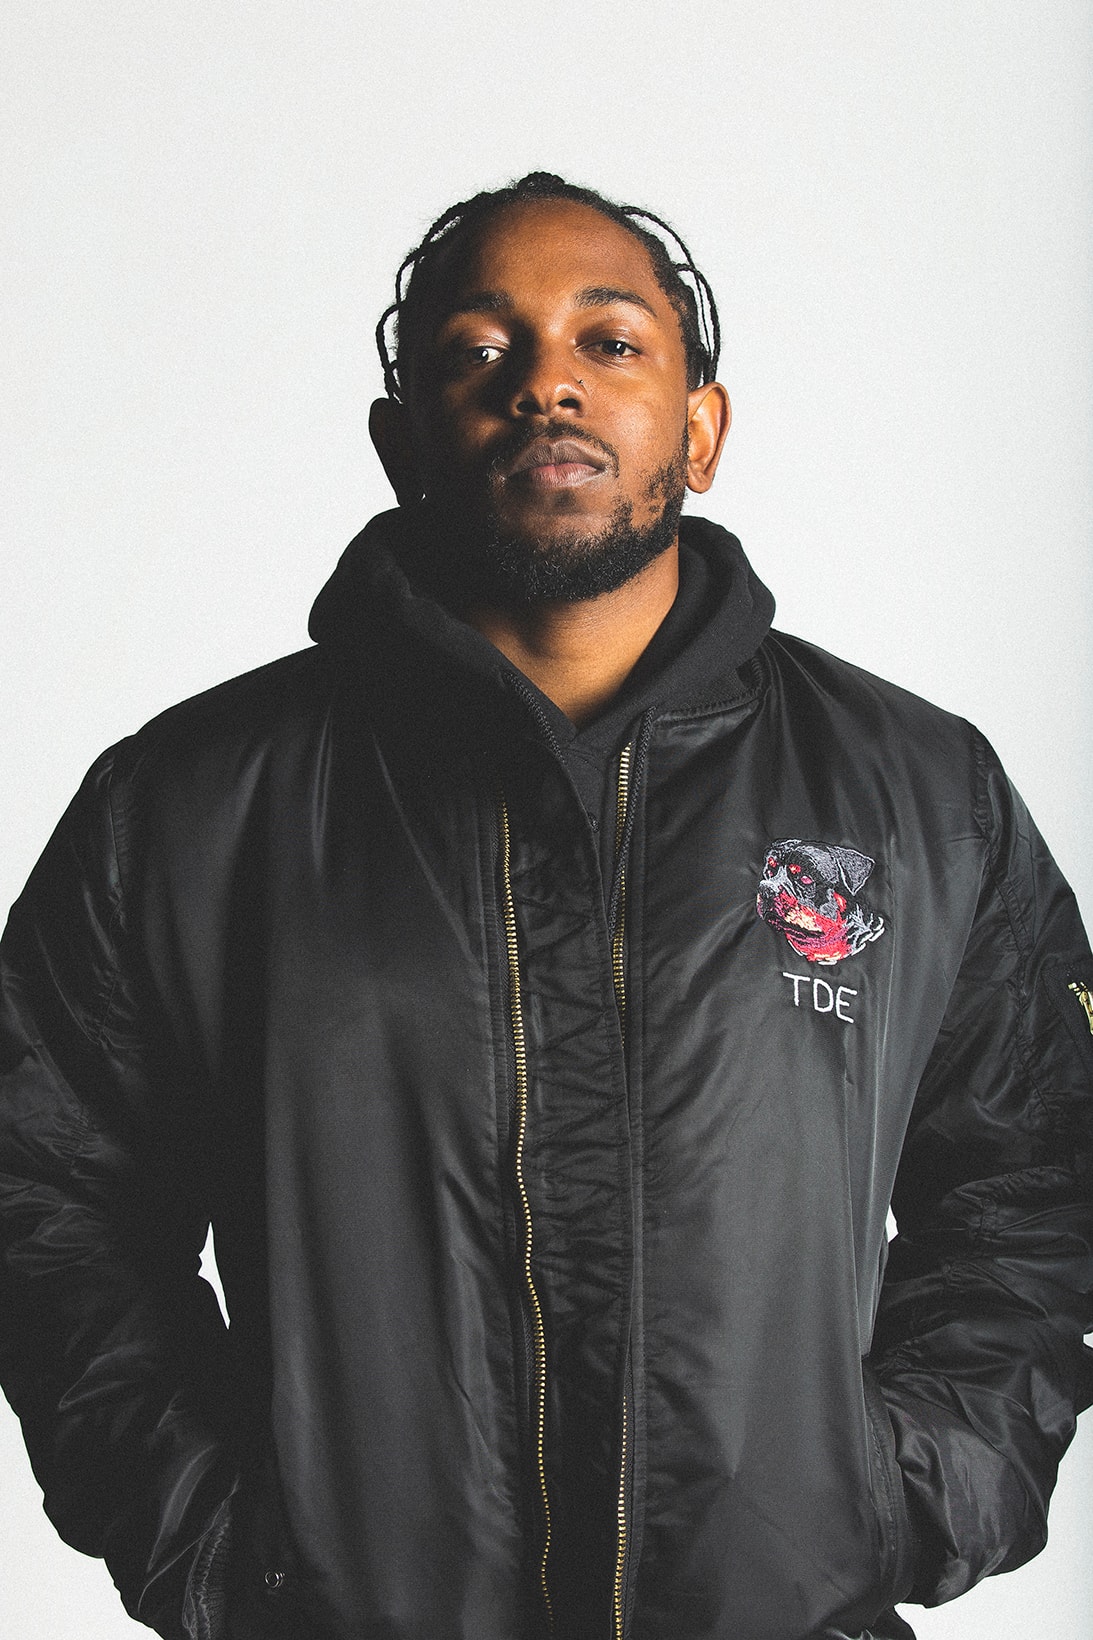 Kendrick Lamar Jay Rock SZA TDE 2016 Holiday Collection Lookbook